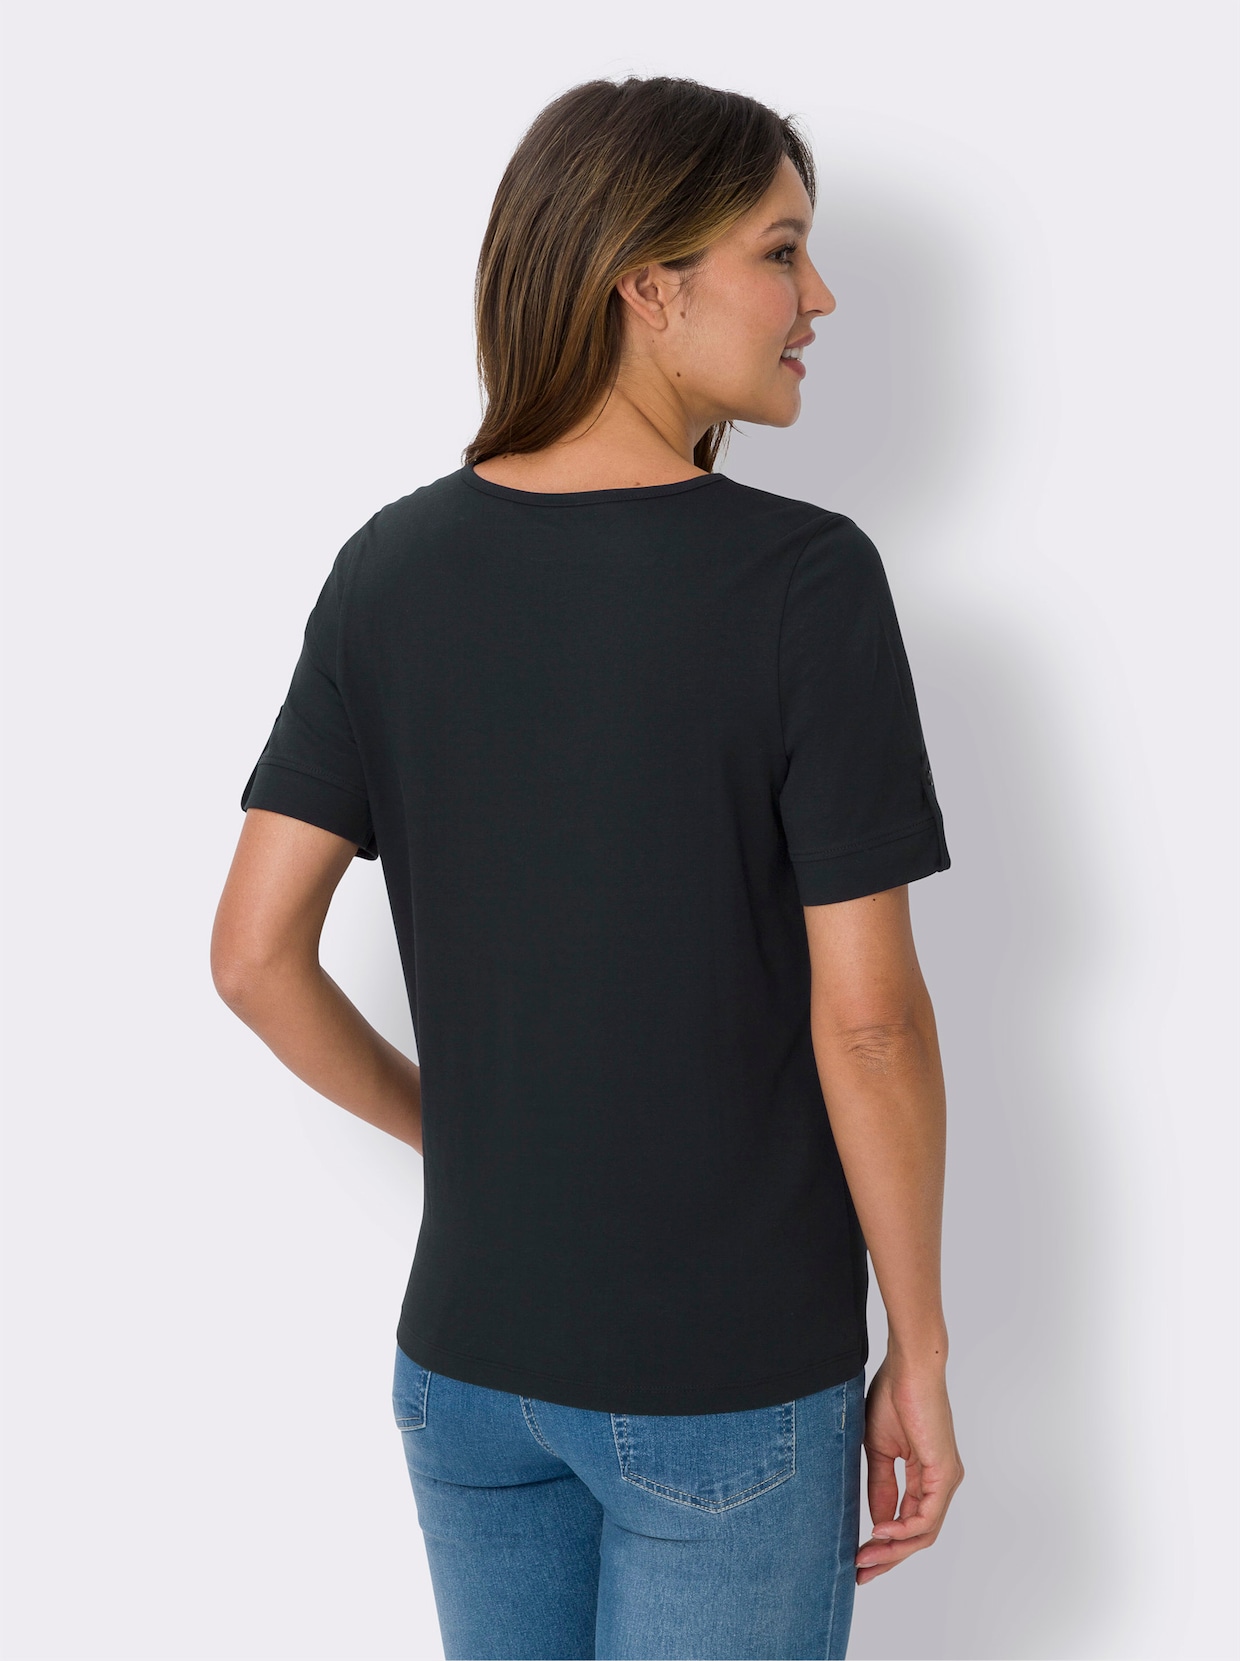 Doppelpack Shirts - ecru + ecru-schwarz-geringelt